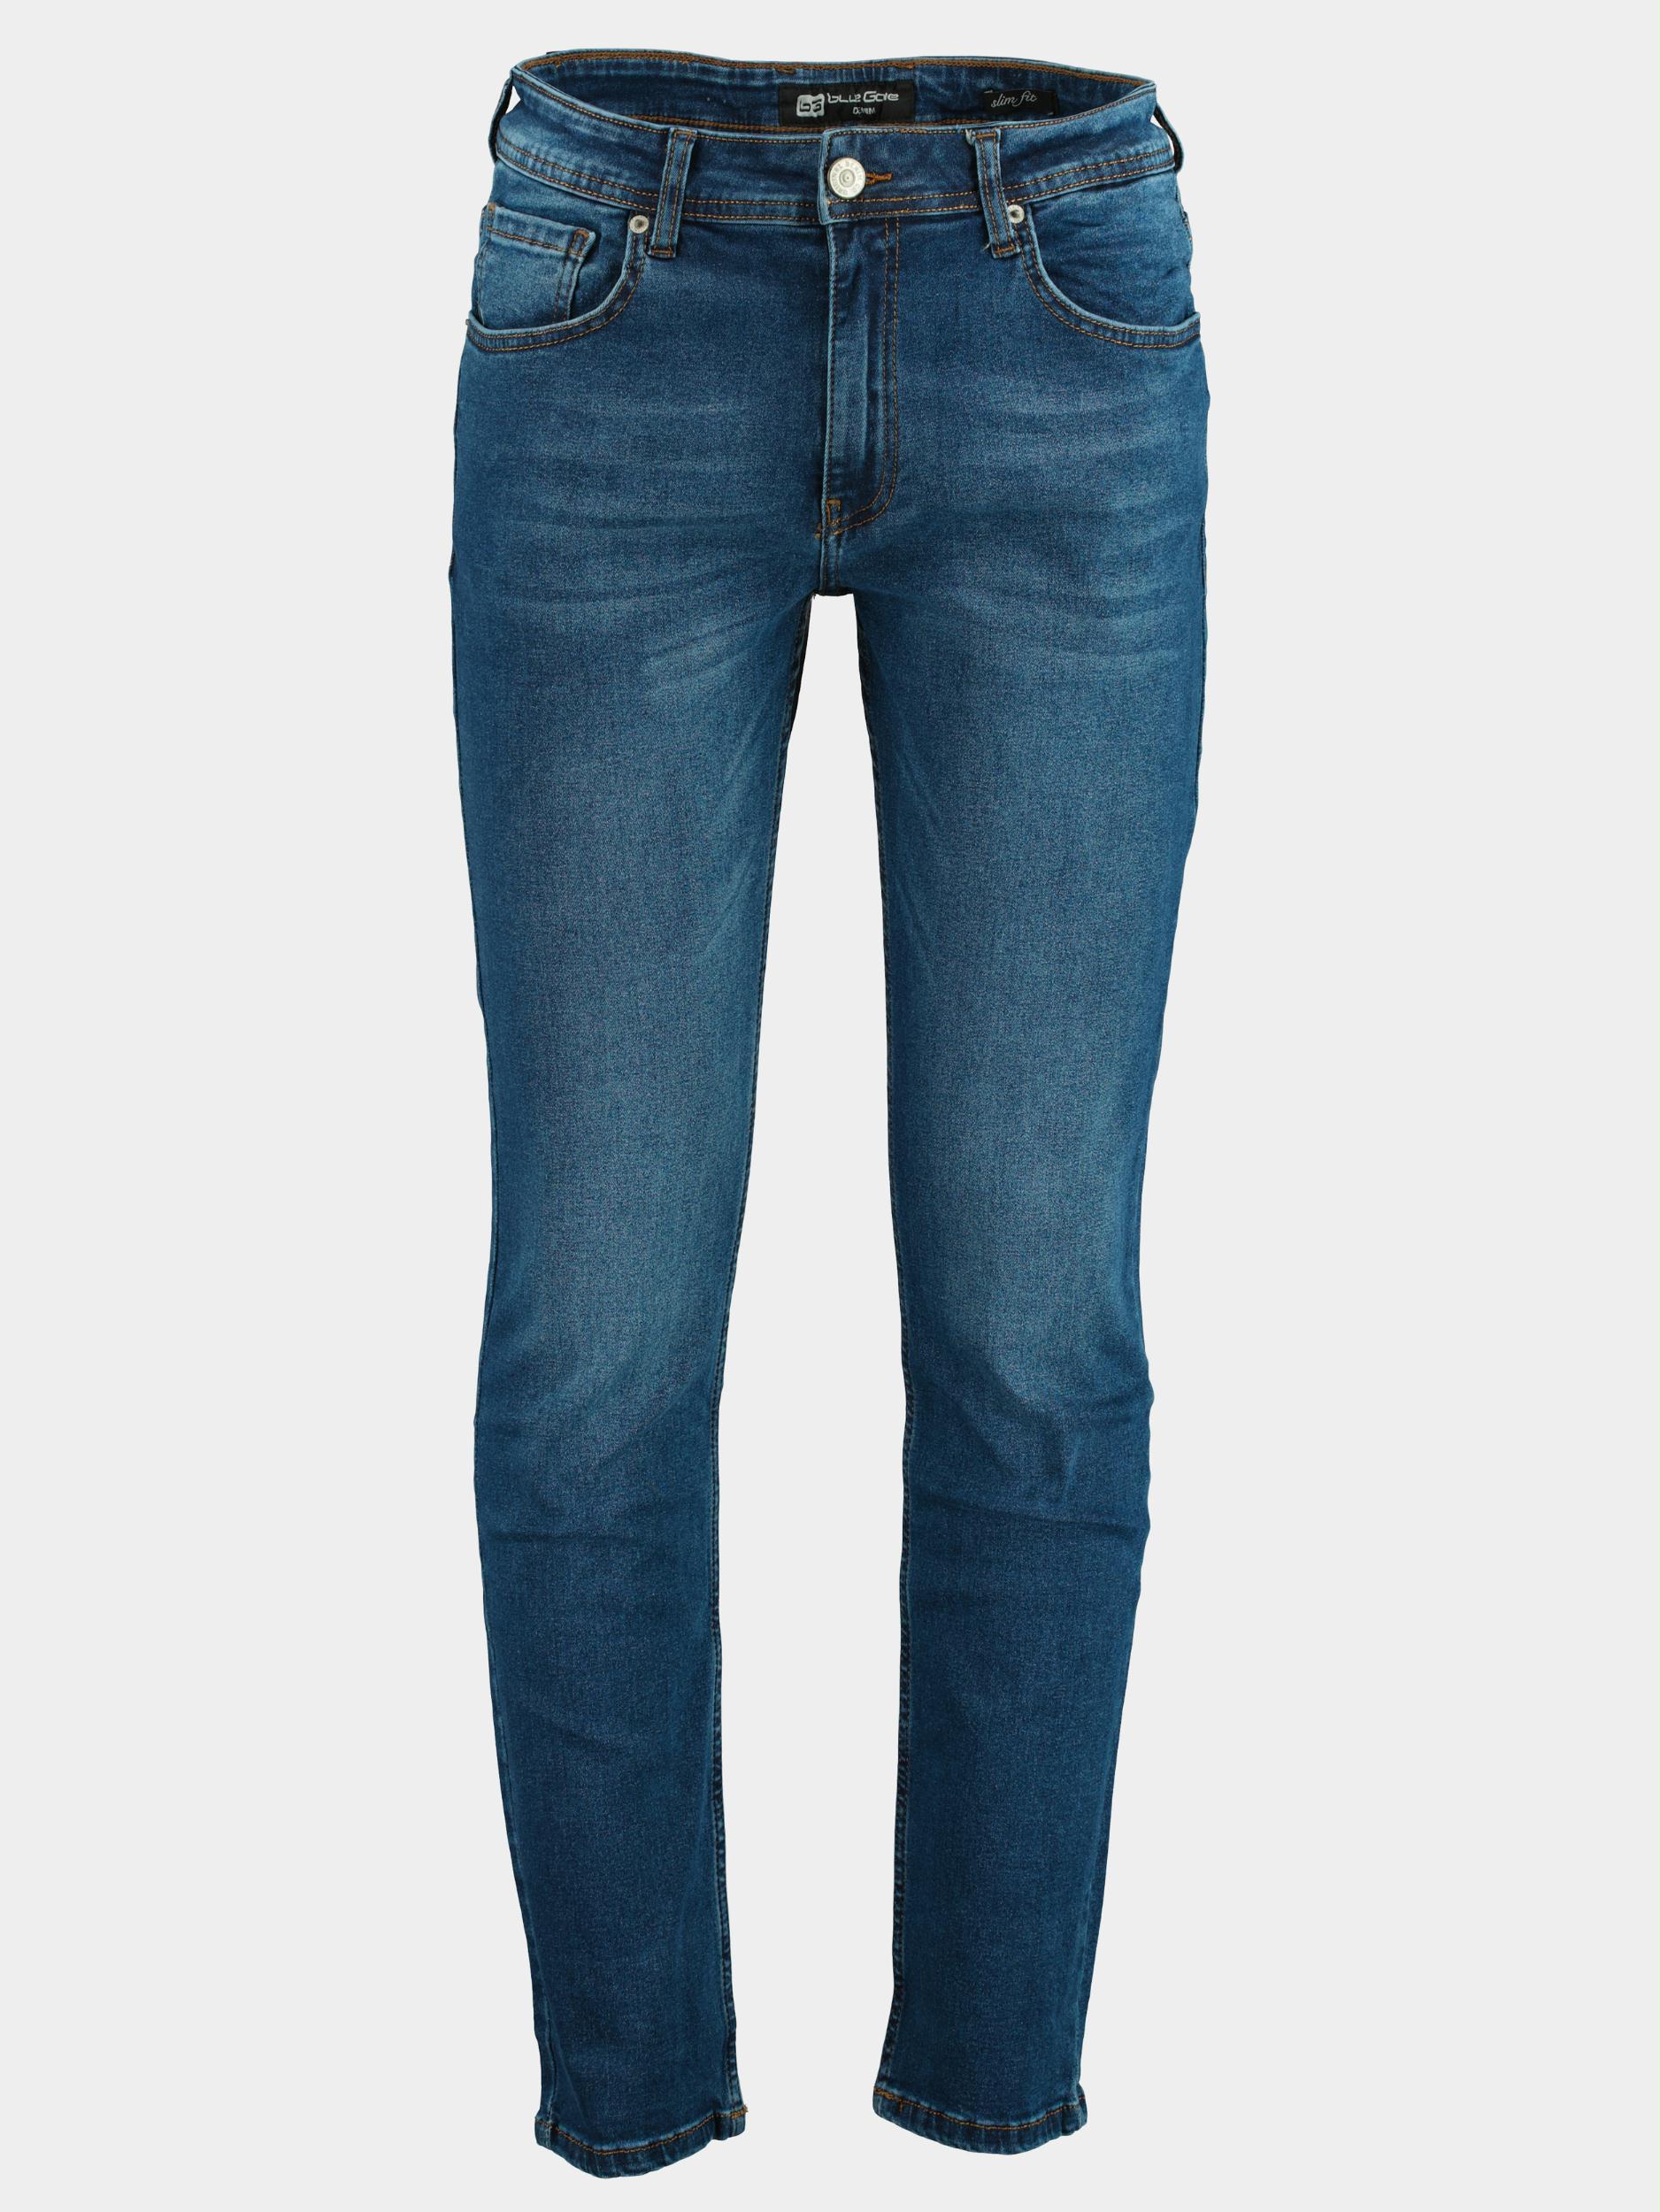 Afbeelding van Blue Game 5-pocket jeans 9001/mid blue